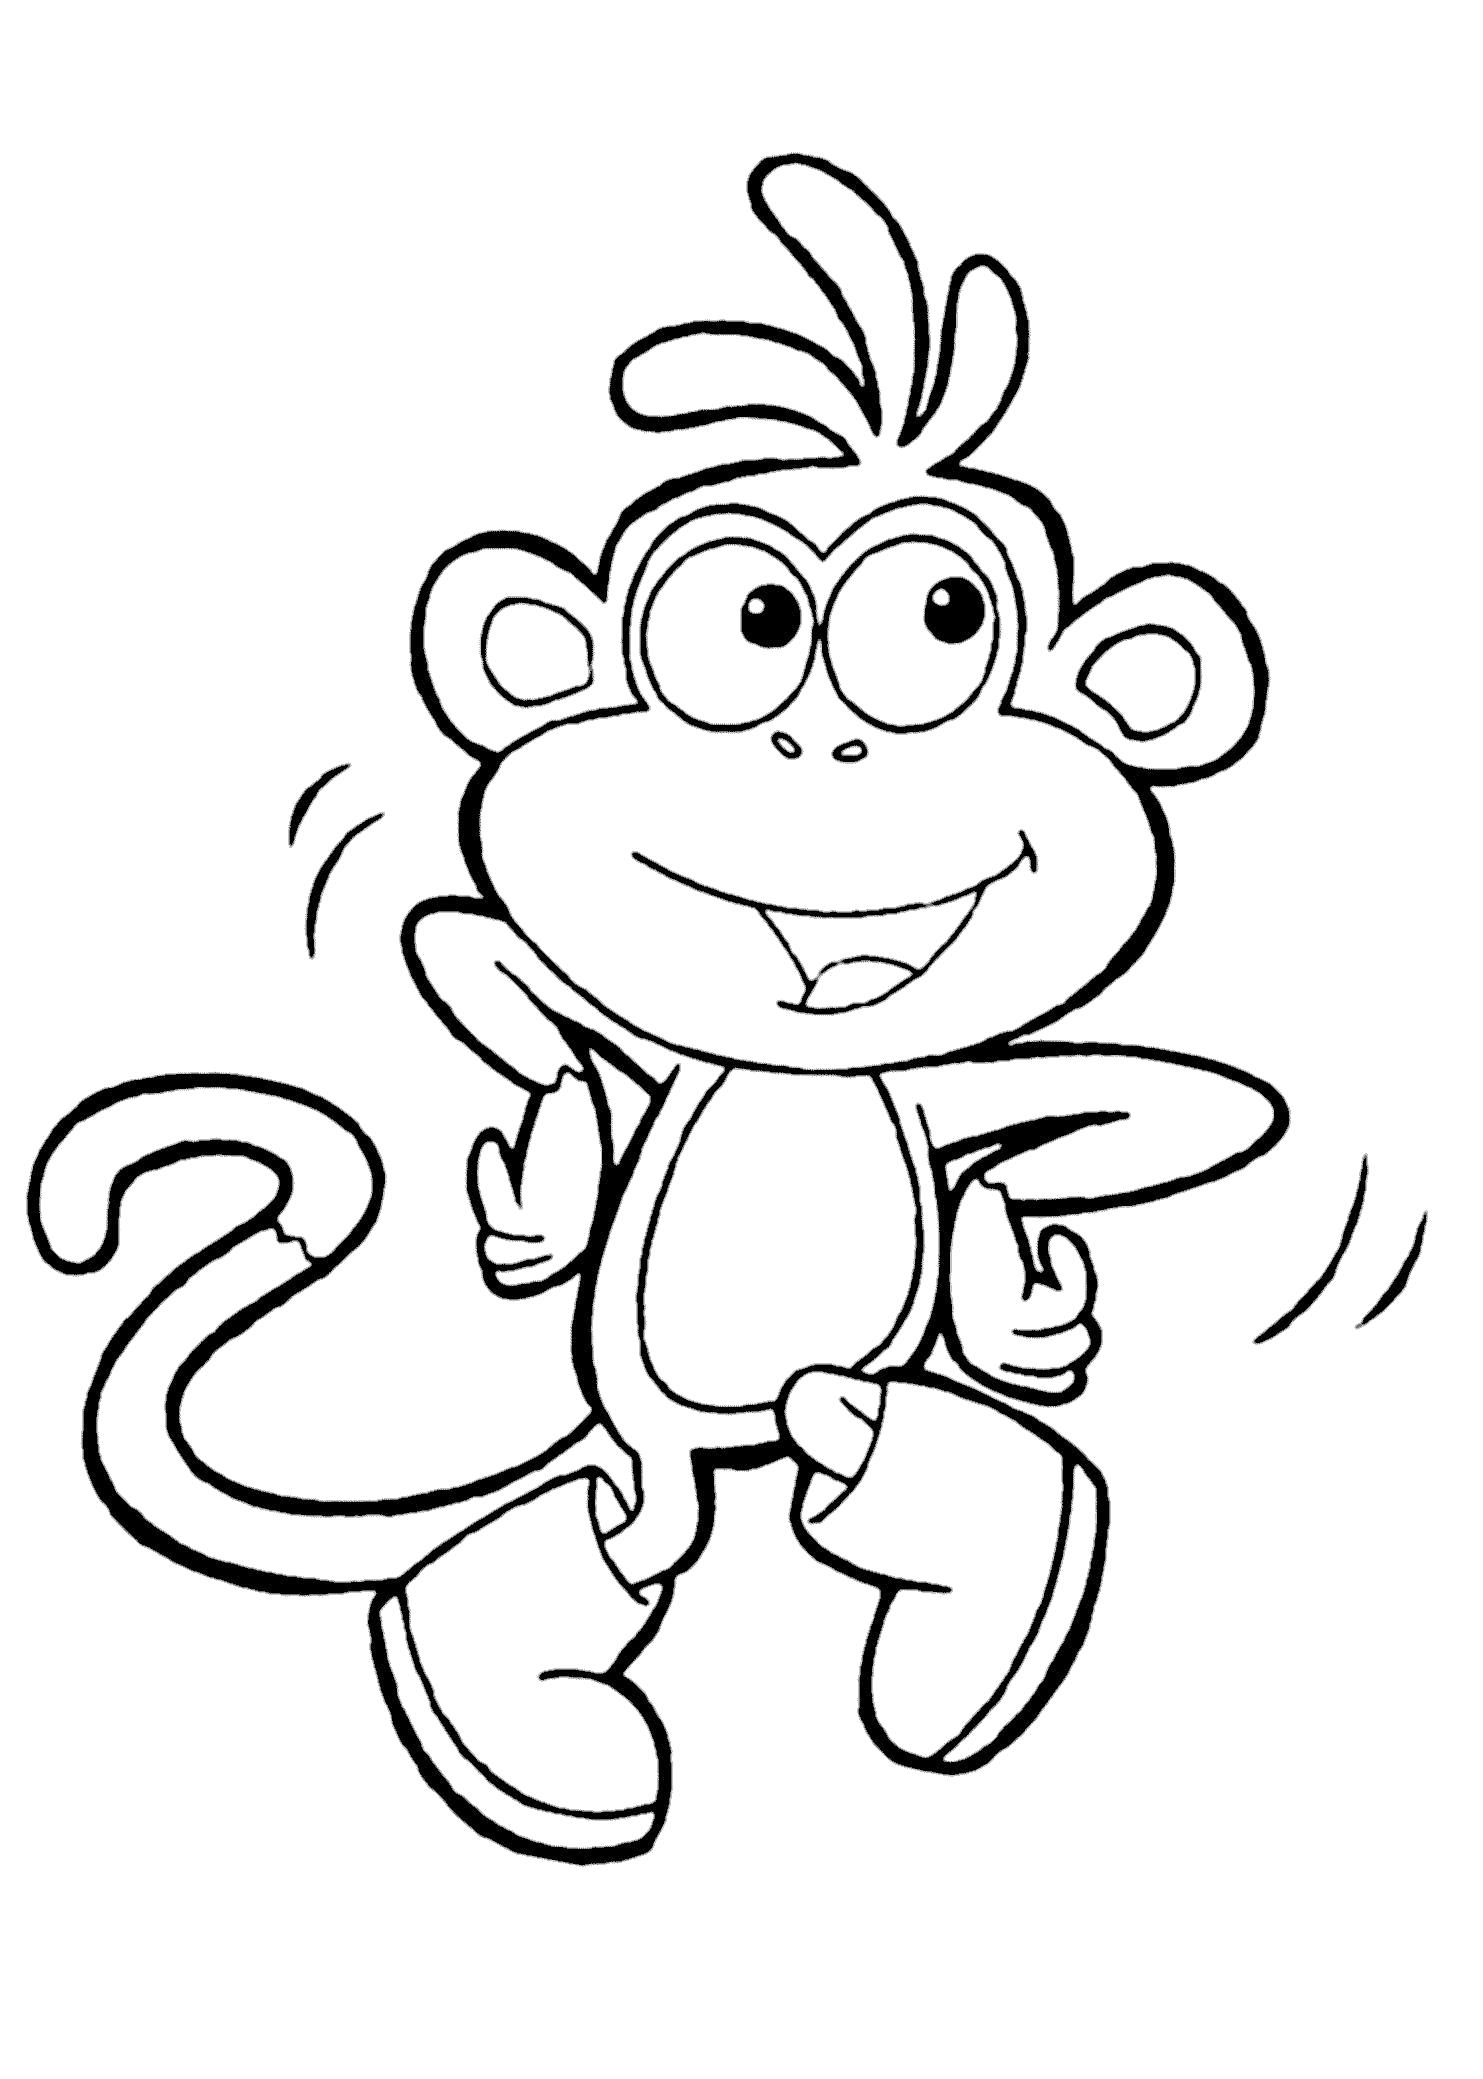 Раскраска  обезьянка. Скачать обезьяна.  Распечатать обезьяна